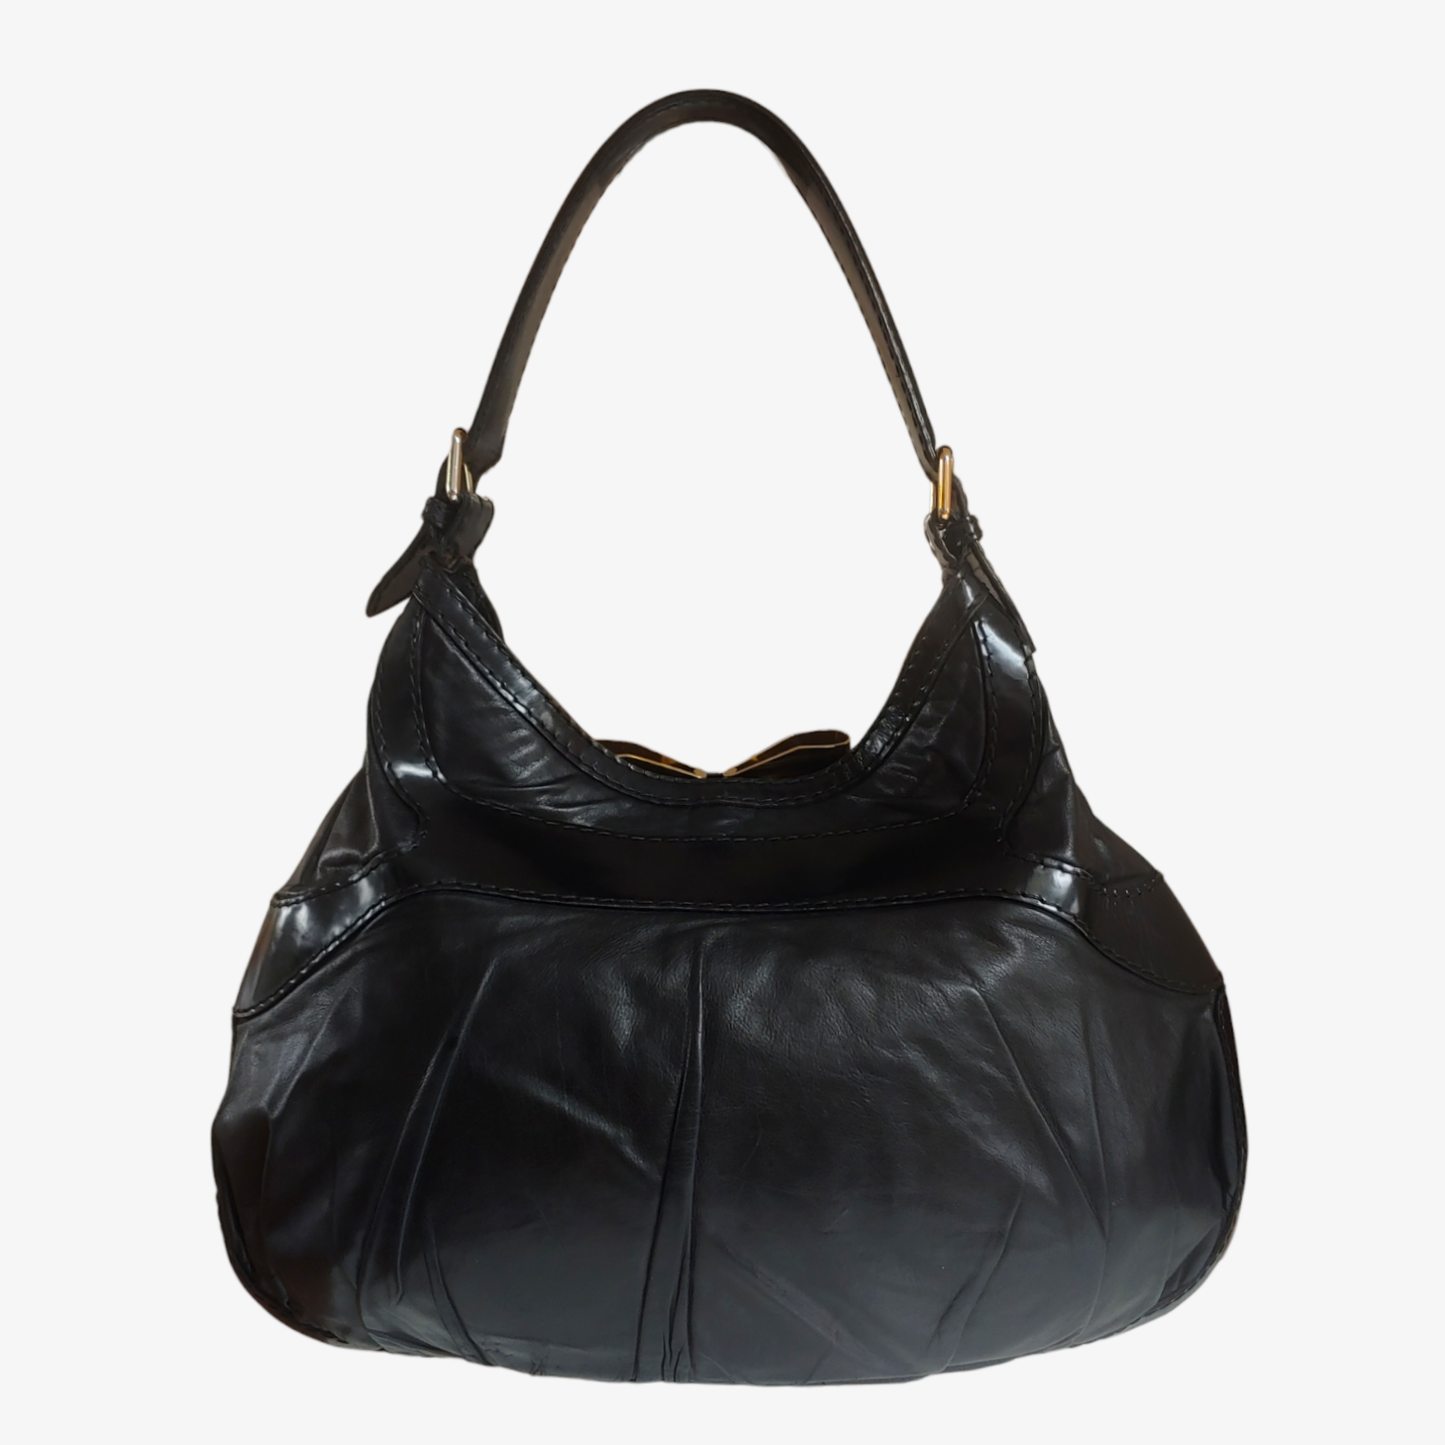 Gucci Queen Hobo Dialux Black Leather Buckle Shoulder Bag Back 189884 002058 - Casspios Dream